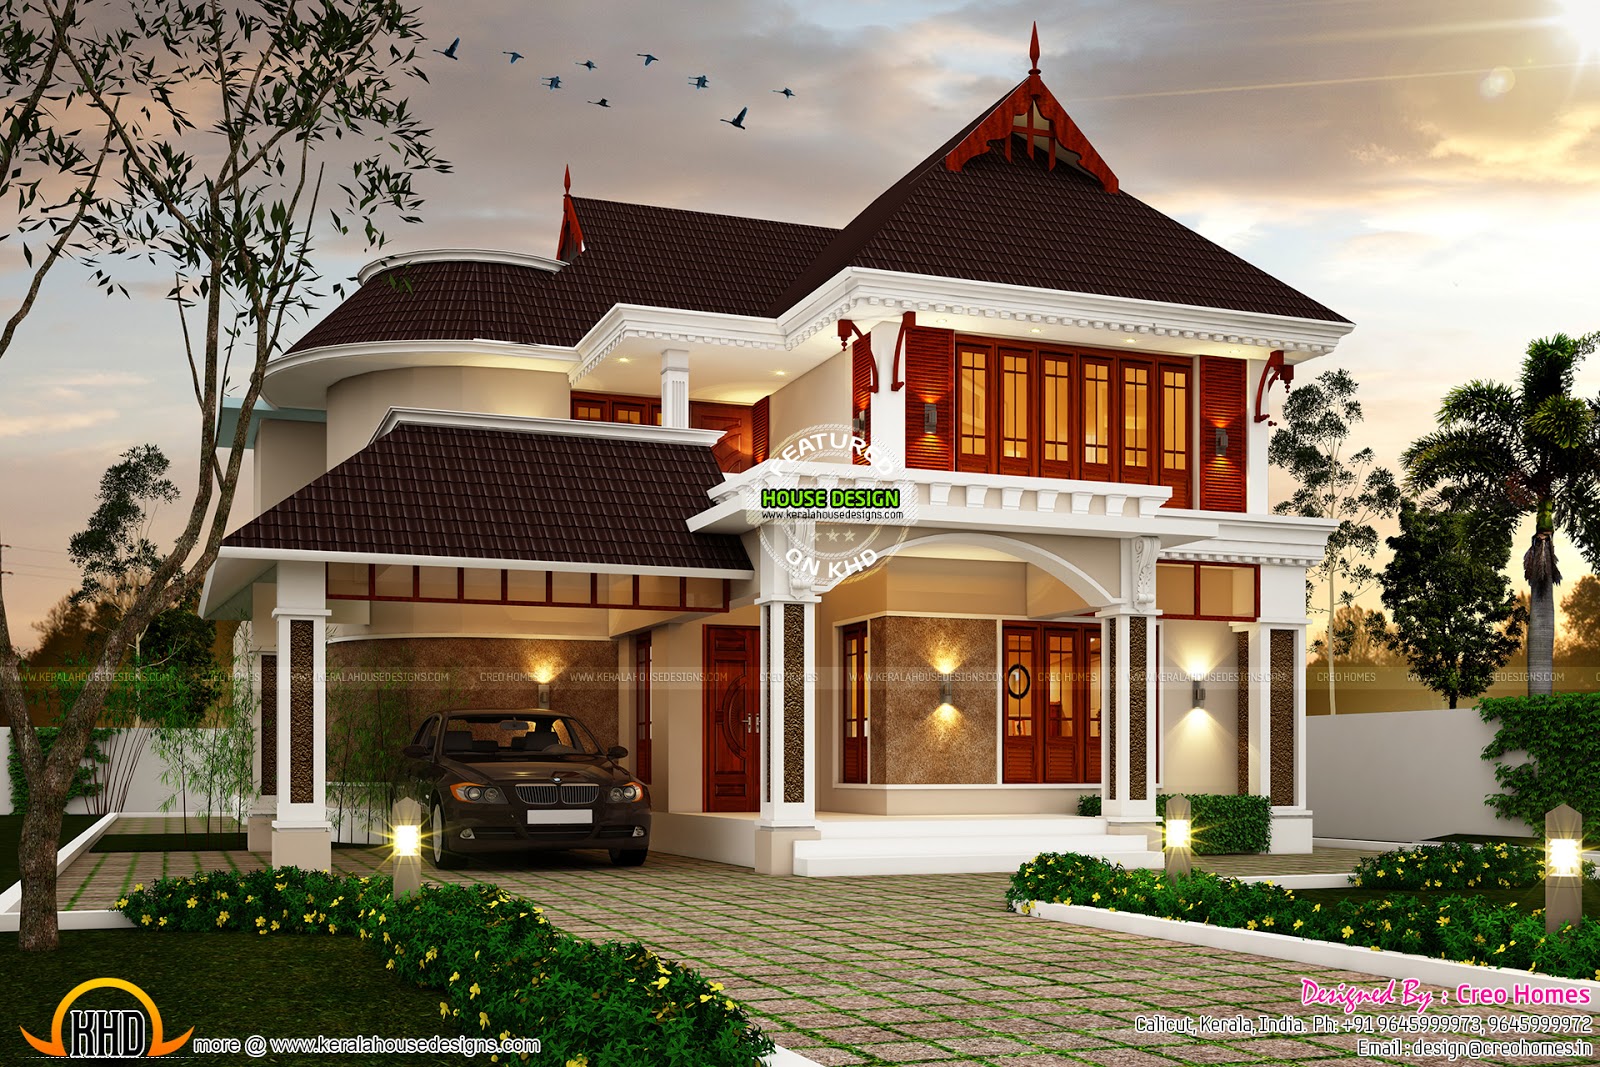 Superb dream  house  plan  Kerala home  design and floor plans 